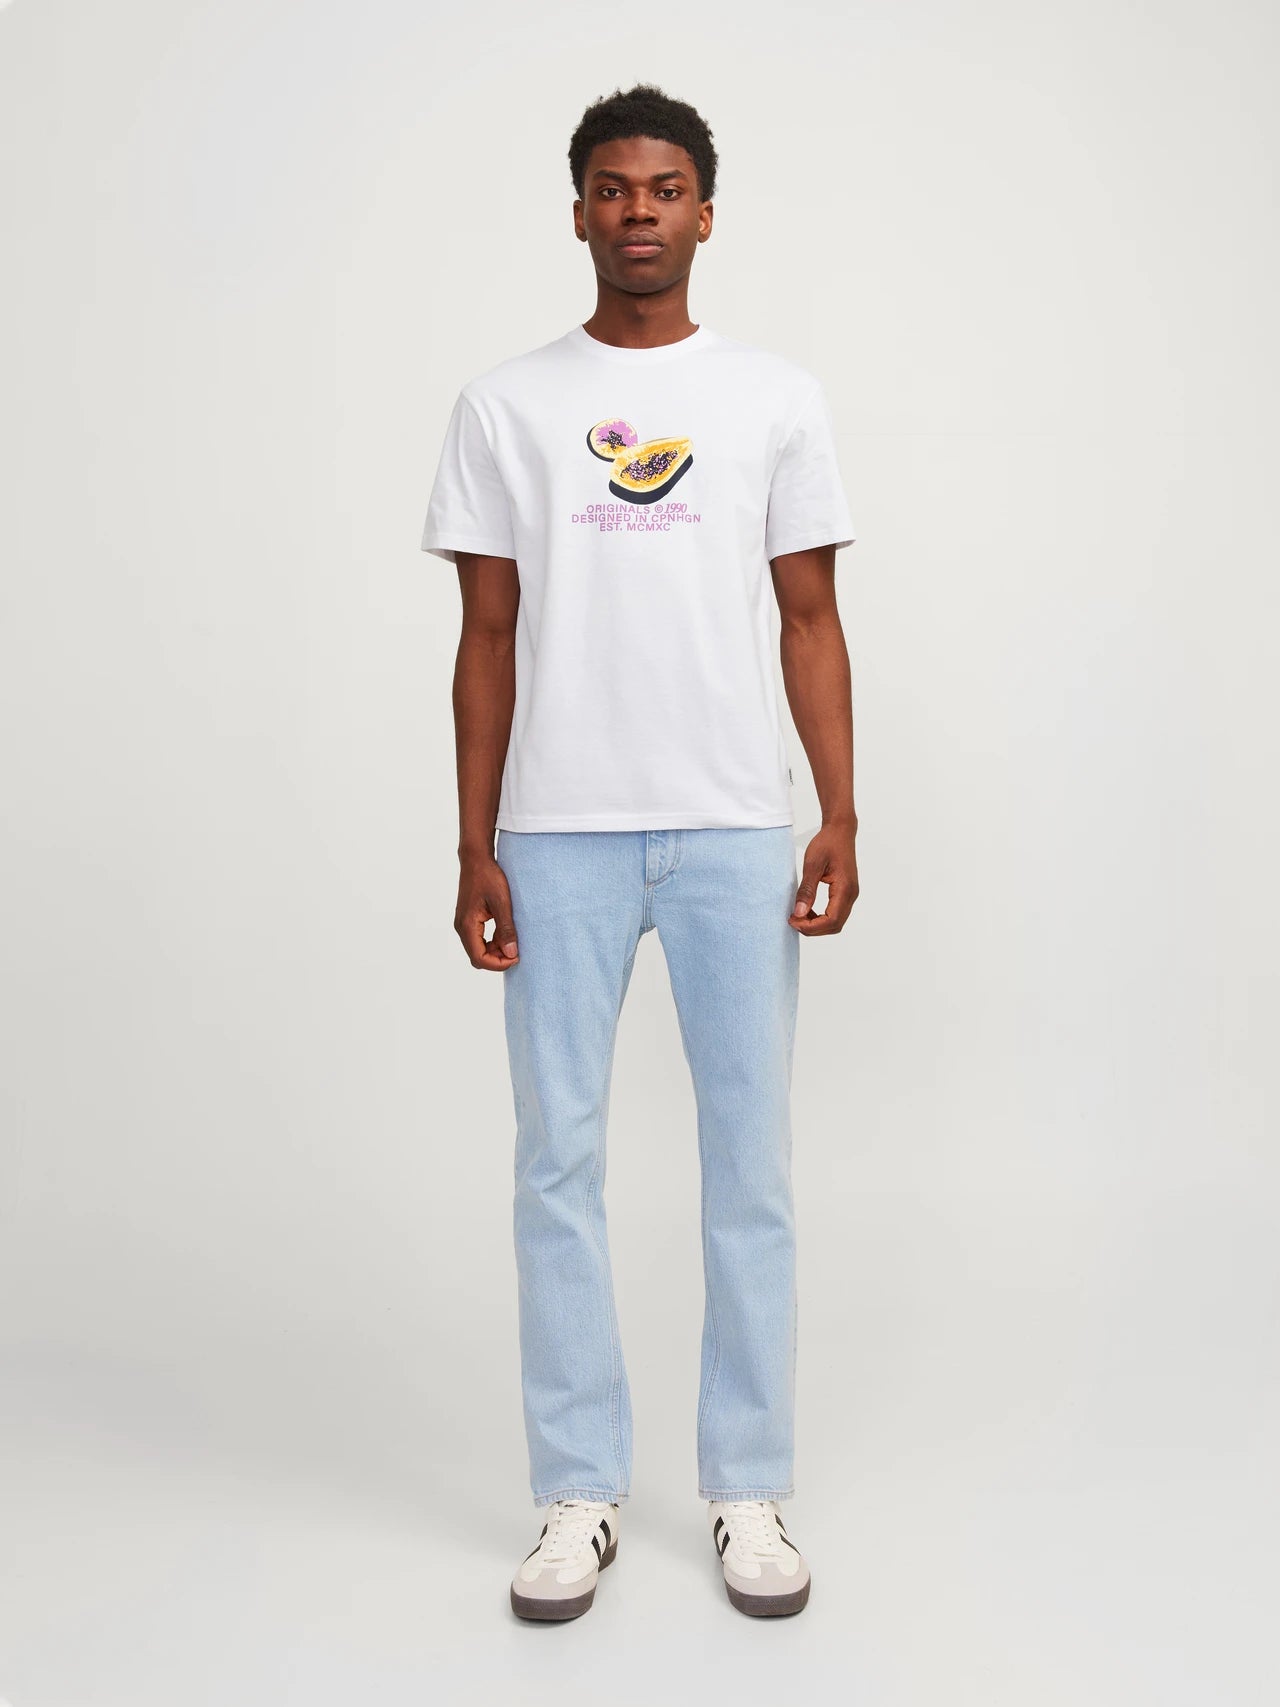 Jack & Jones | Printed Crew Neck T-Shirt | Bright White